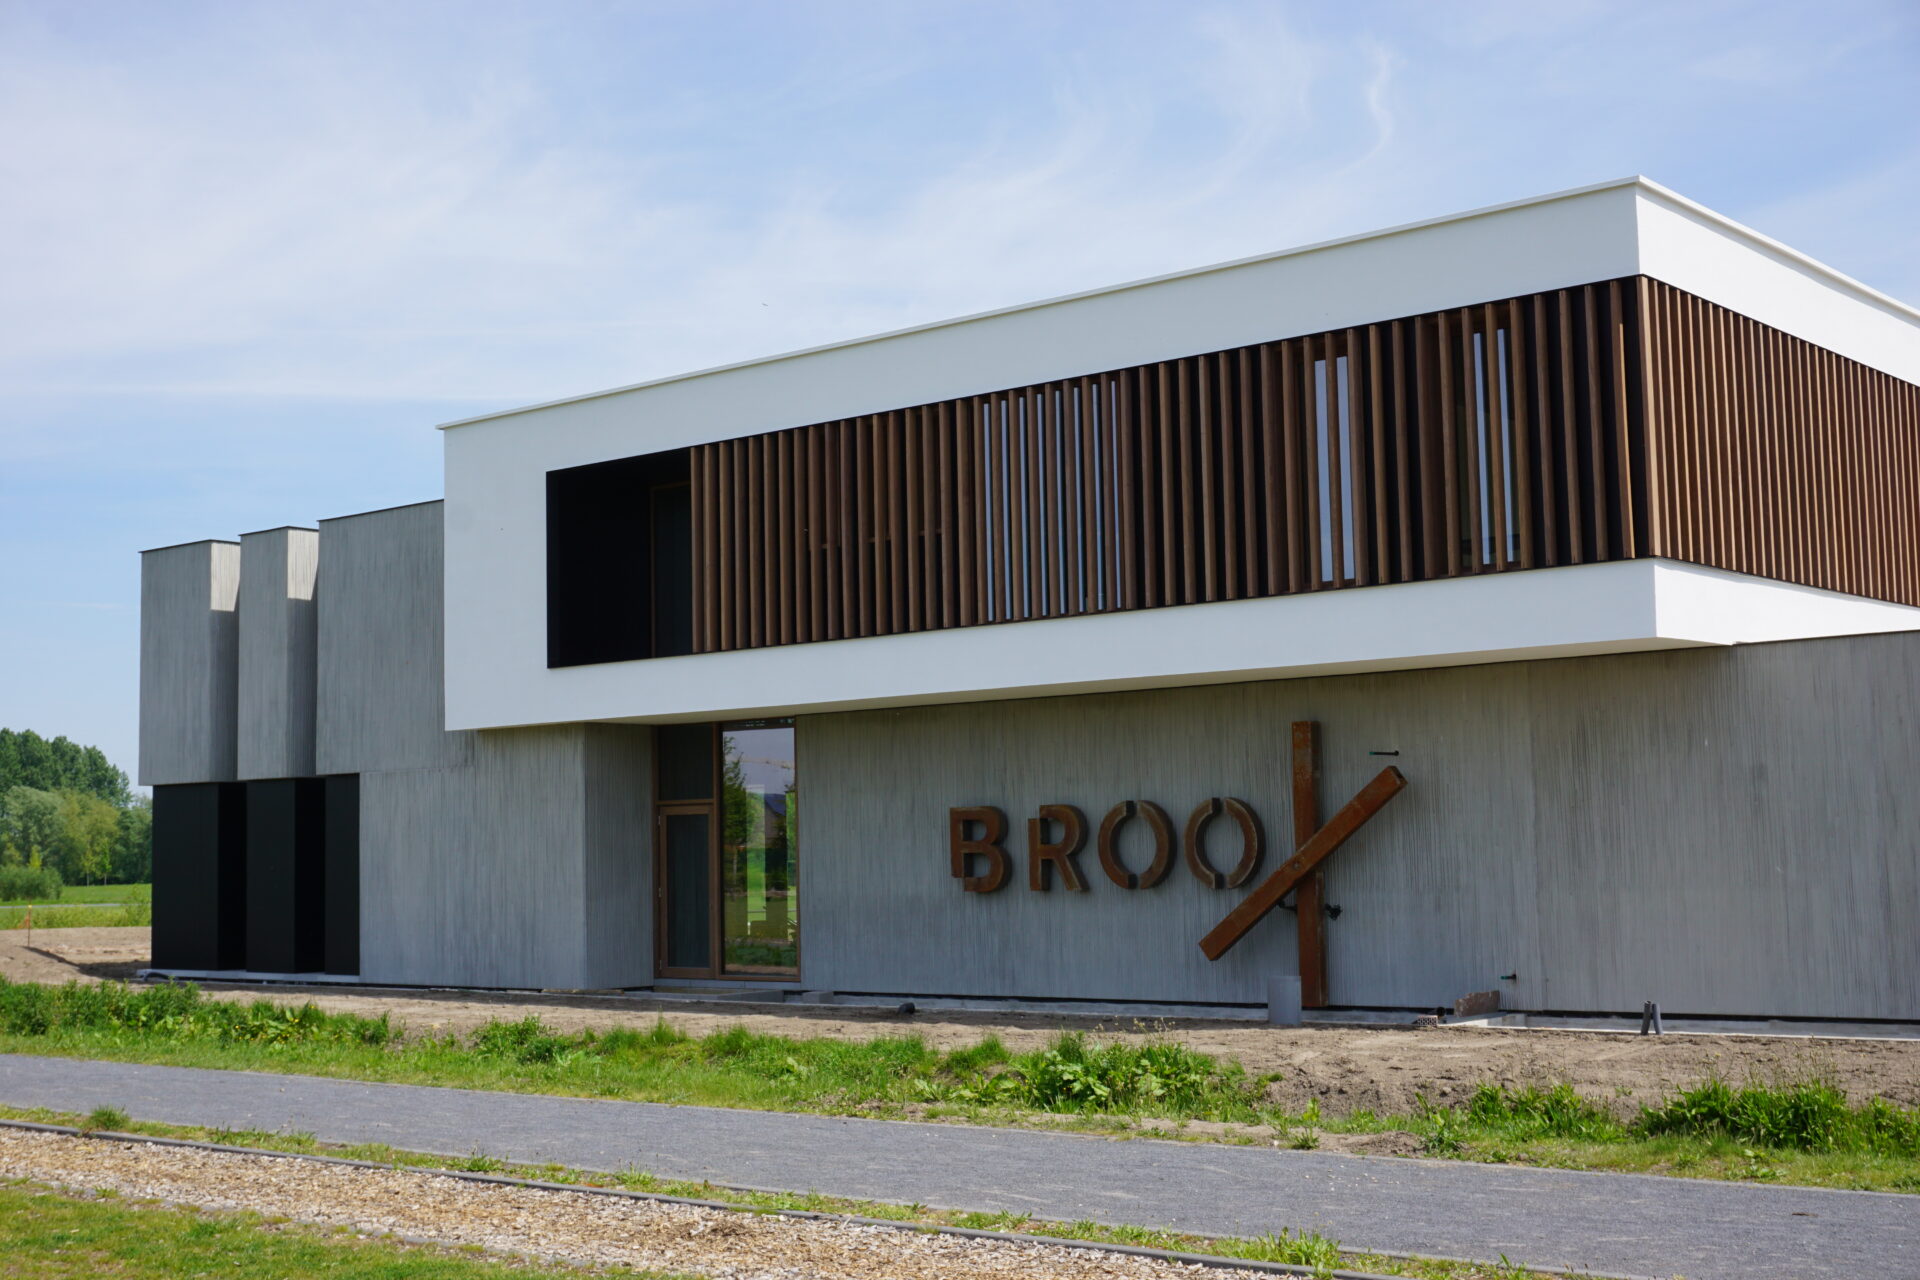 Restaurant Broox